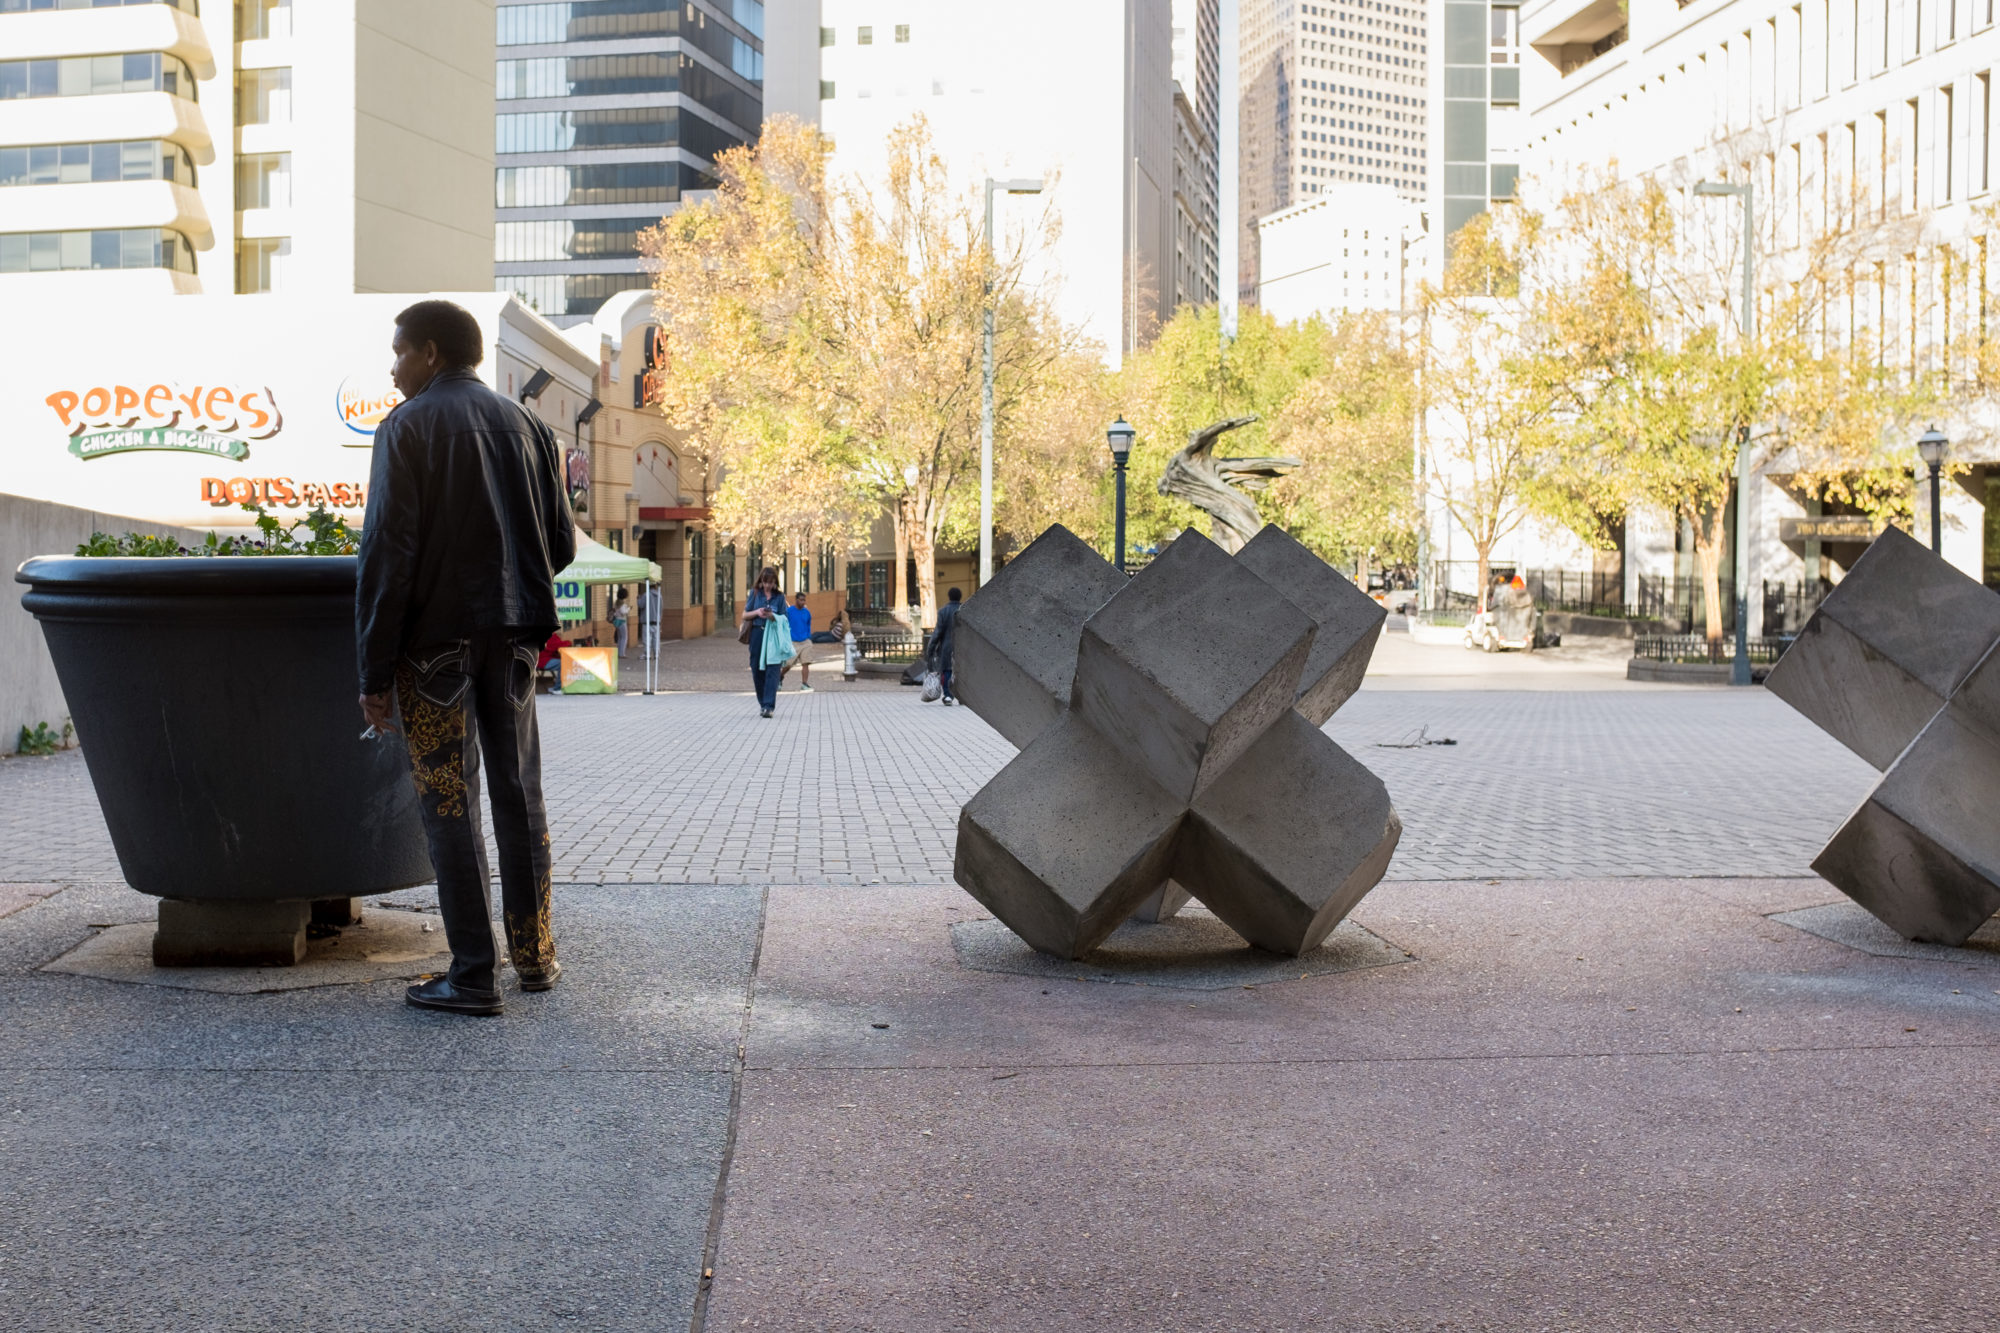 A man stands between a planter and a cubic sculpture